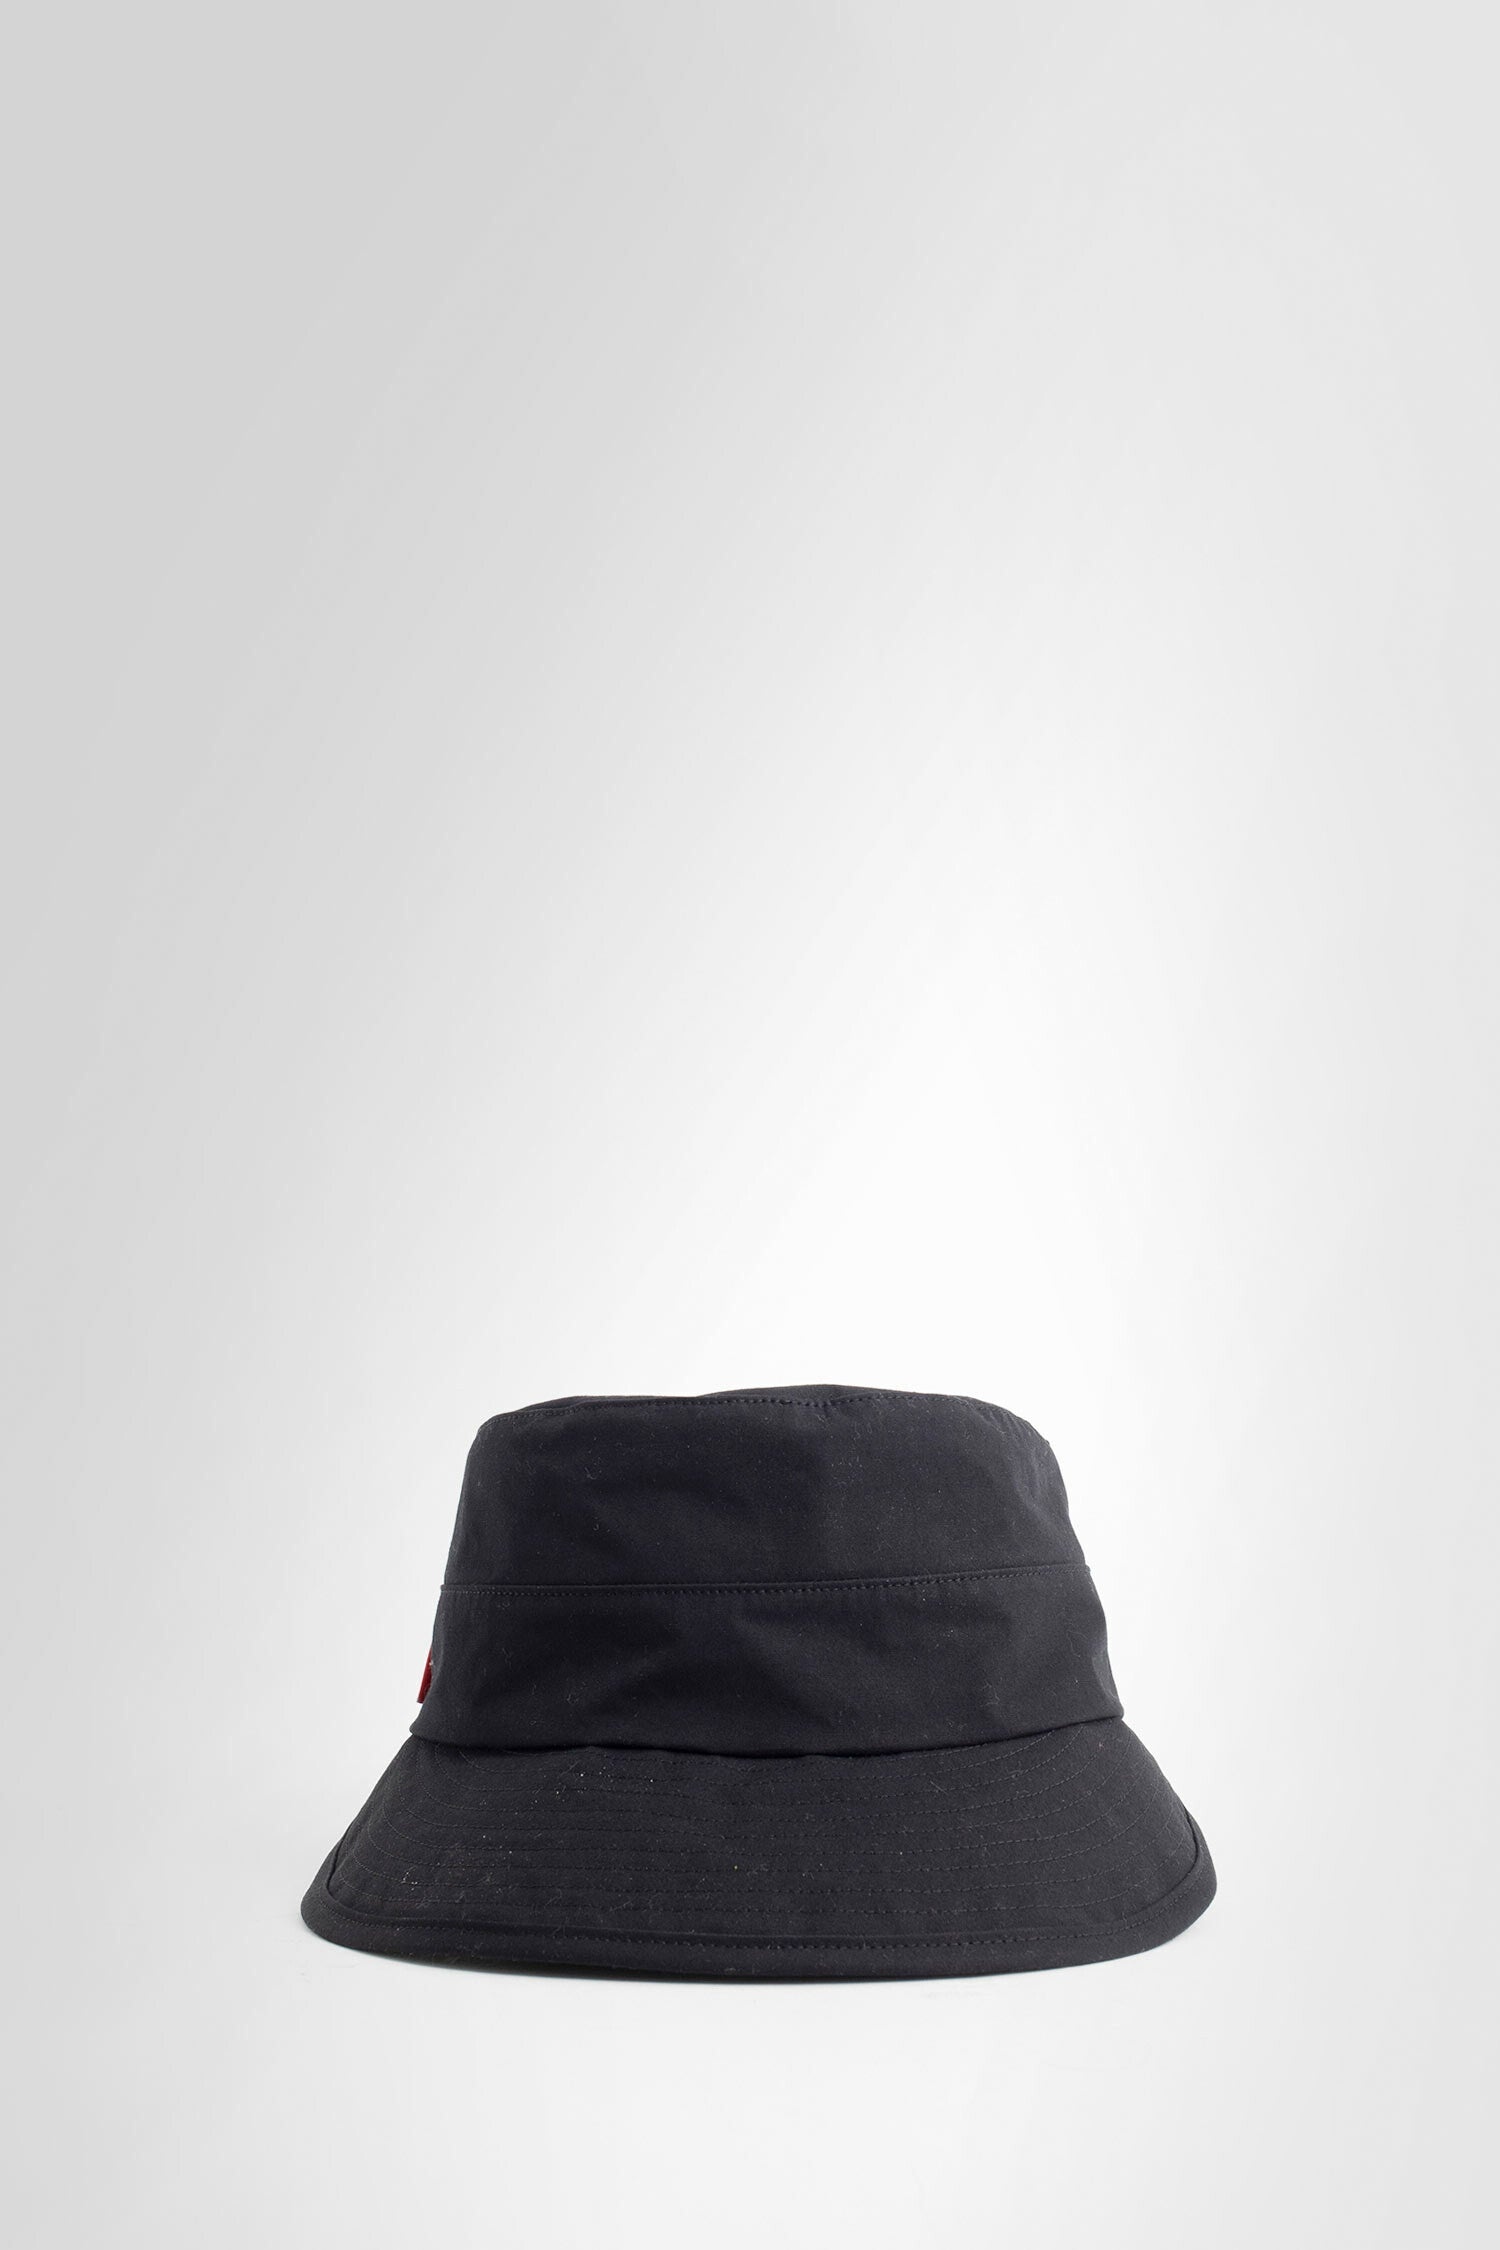 UNDERCOVER MAN BLACK HATS - 3